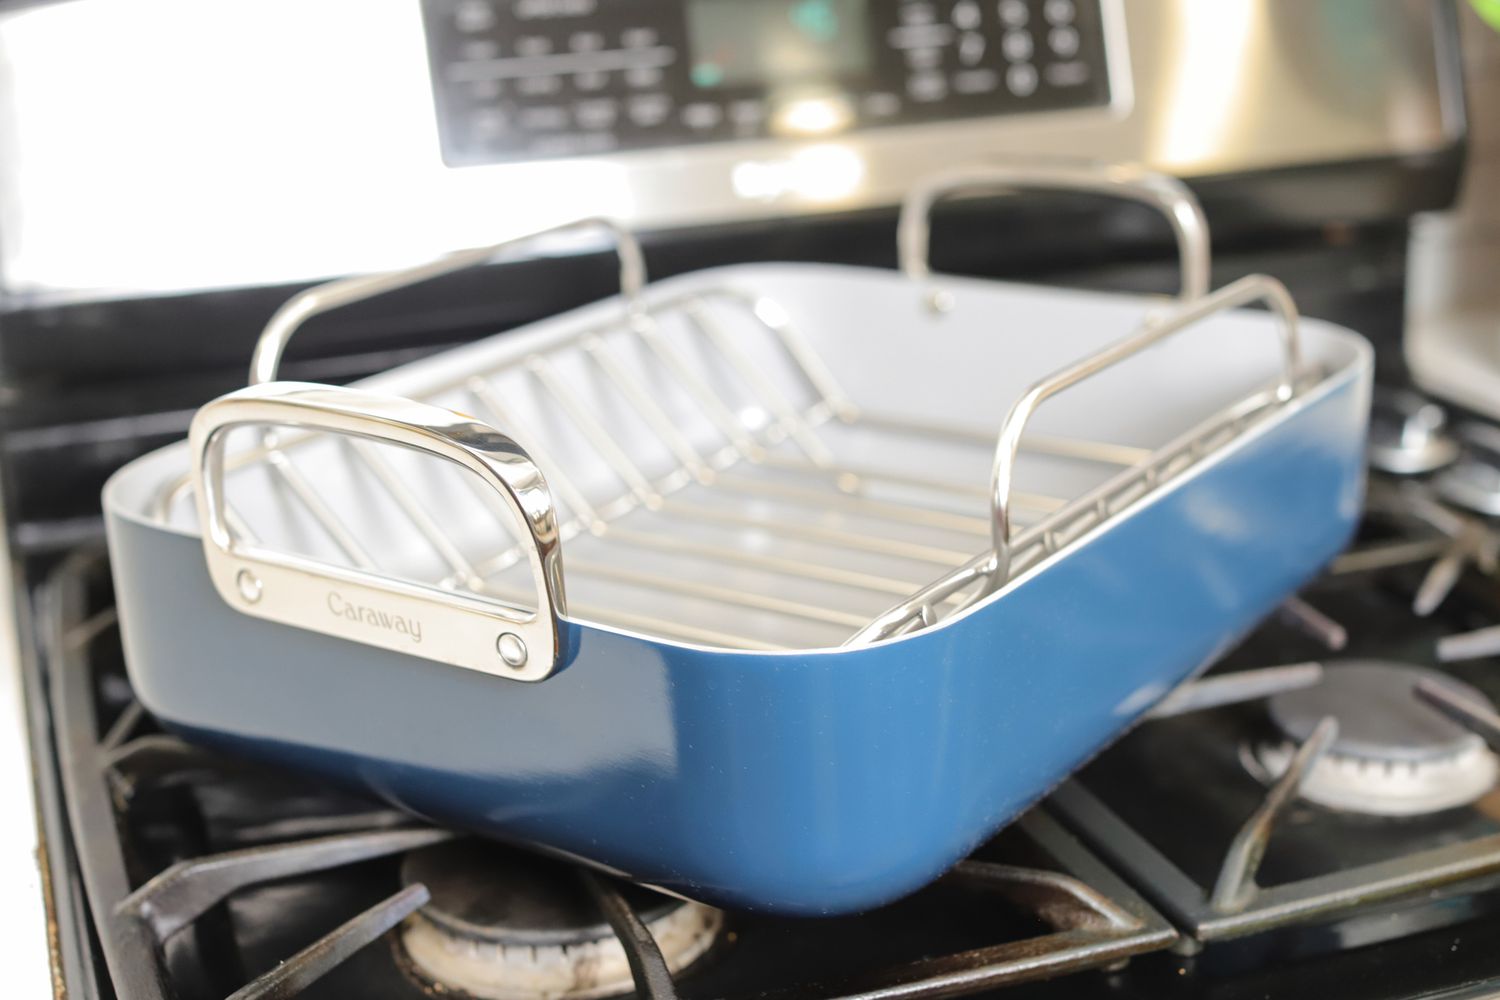 Blue Caraway roasting pan on gas stove